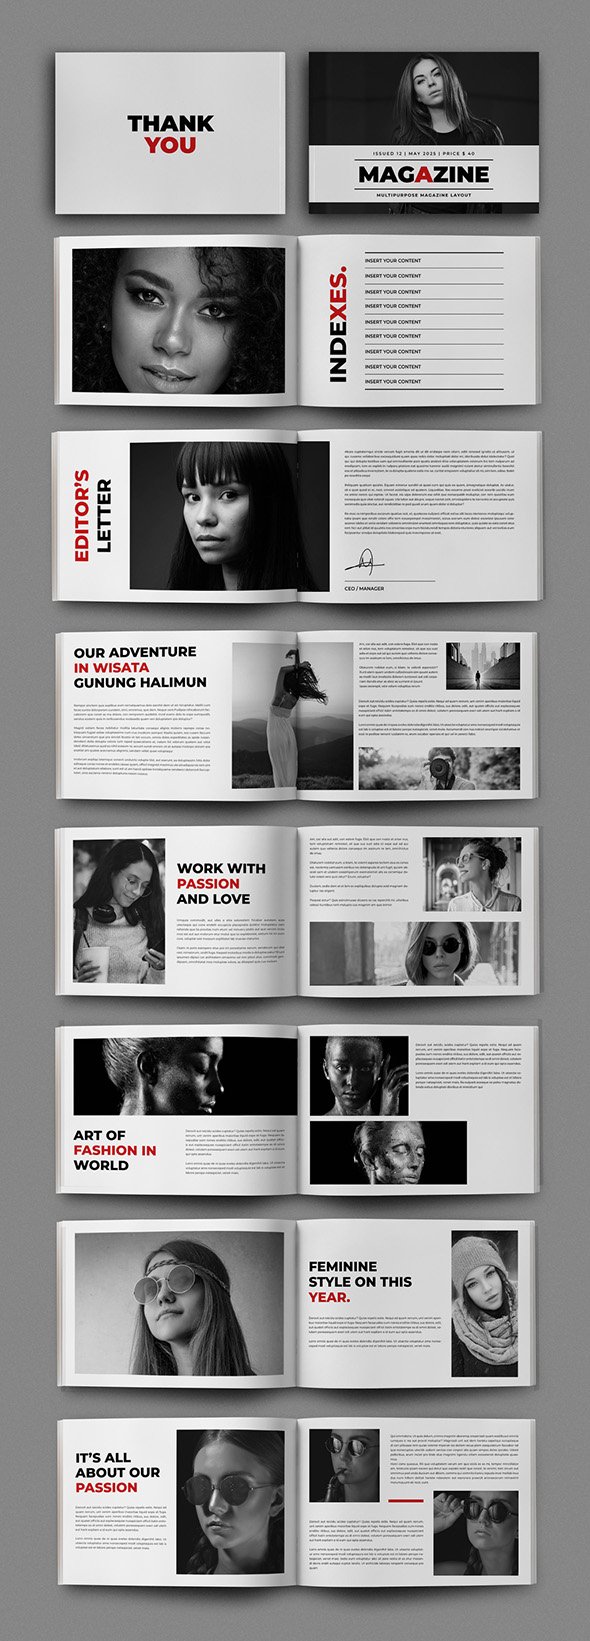 AdobeStock - Magazine Template - 722994602